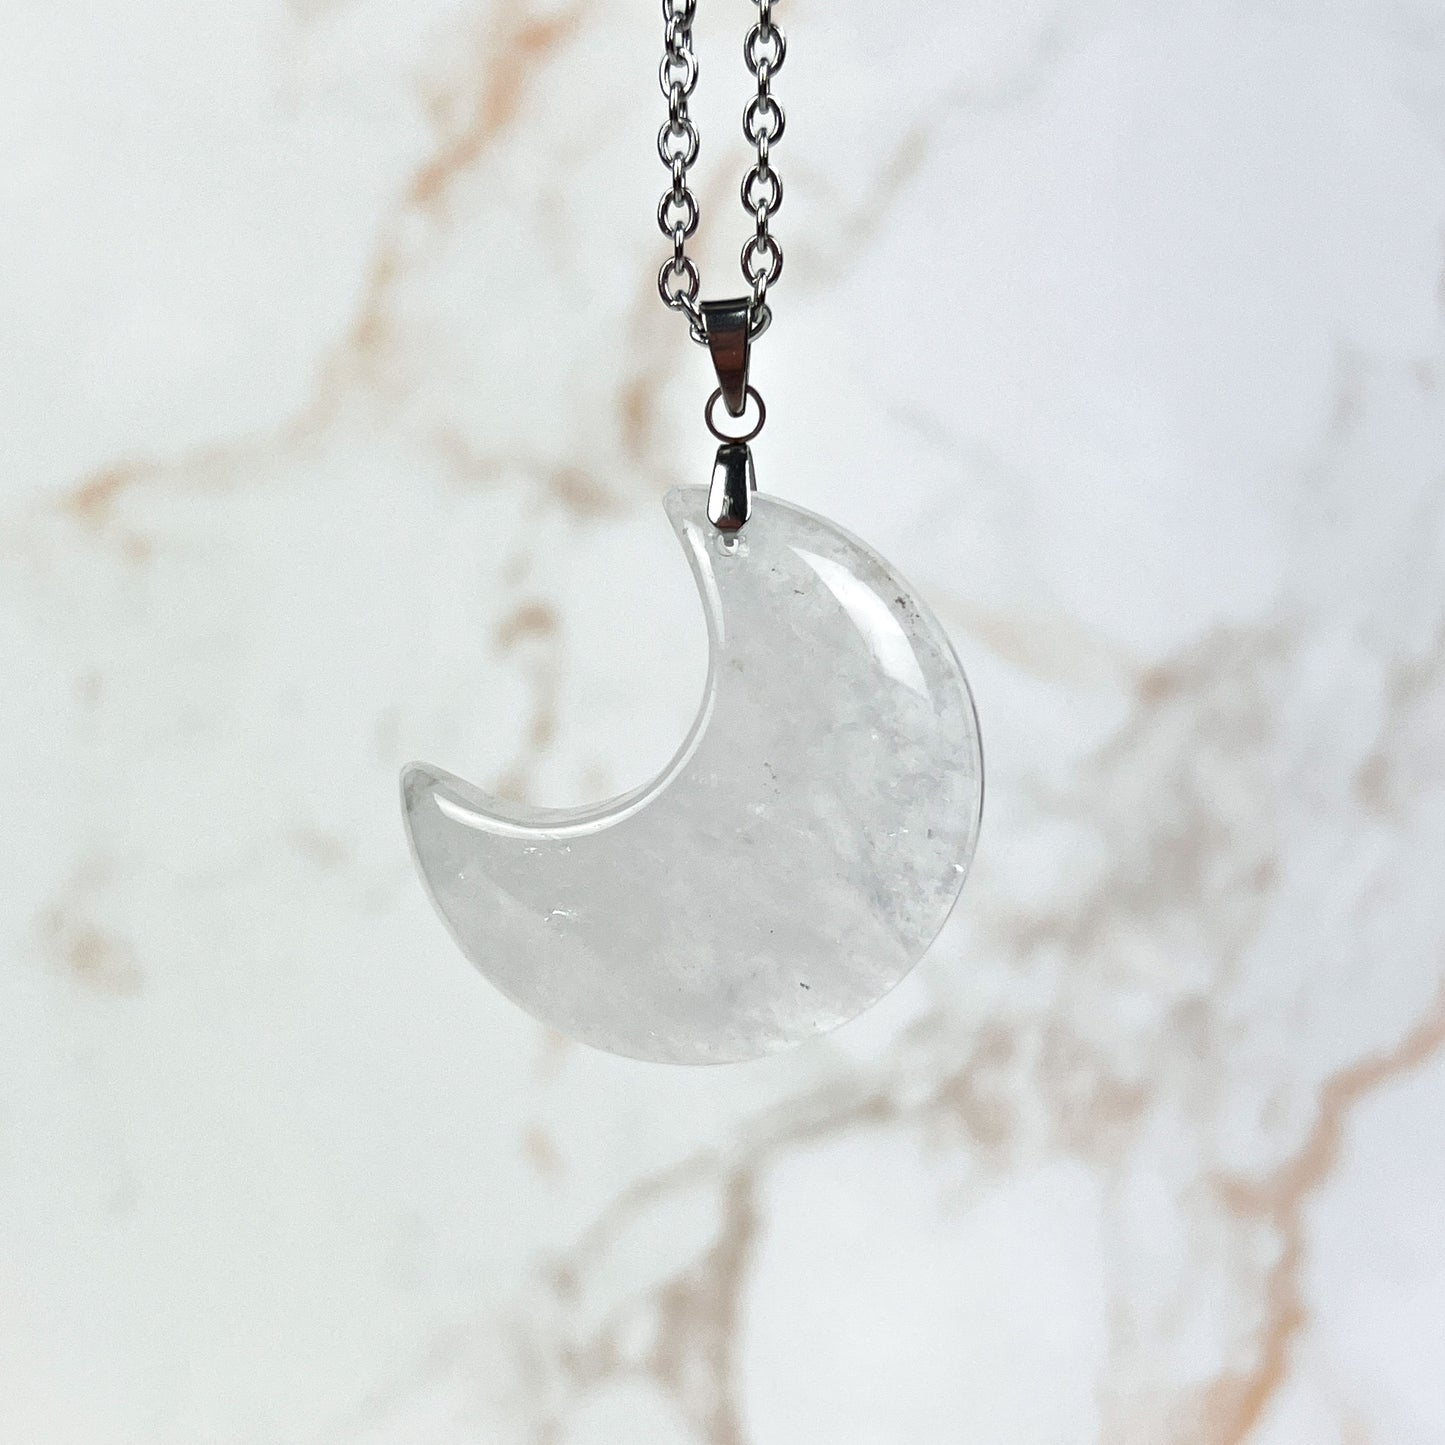 Moon crescent clear quartz or obsidian stainless steel pendant necklace Baguette Magick